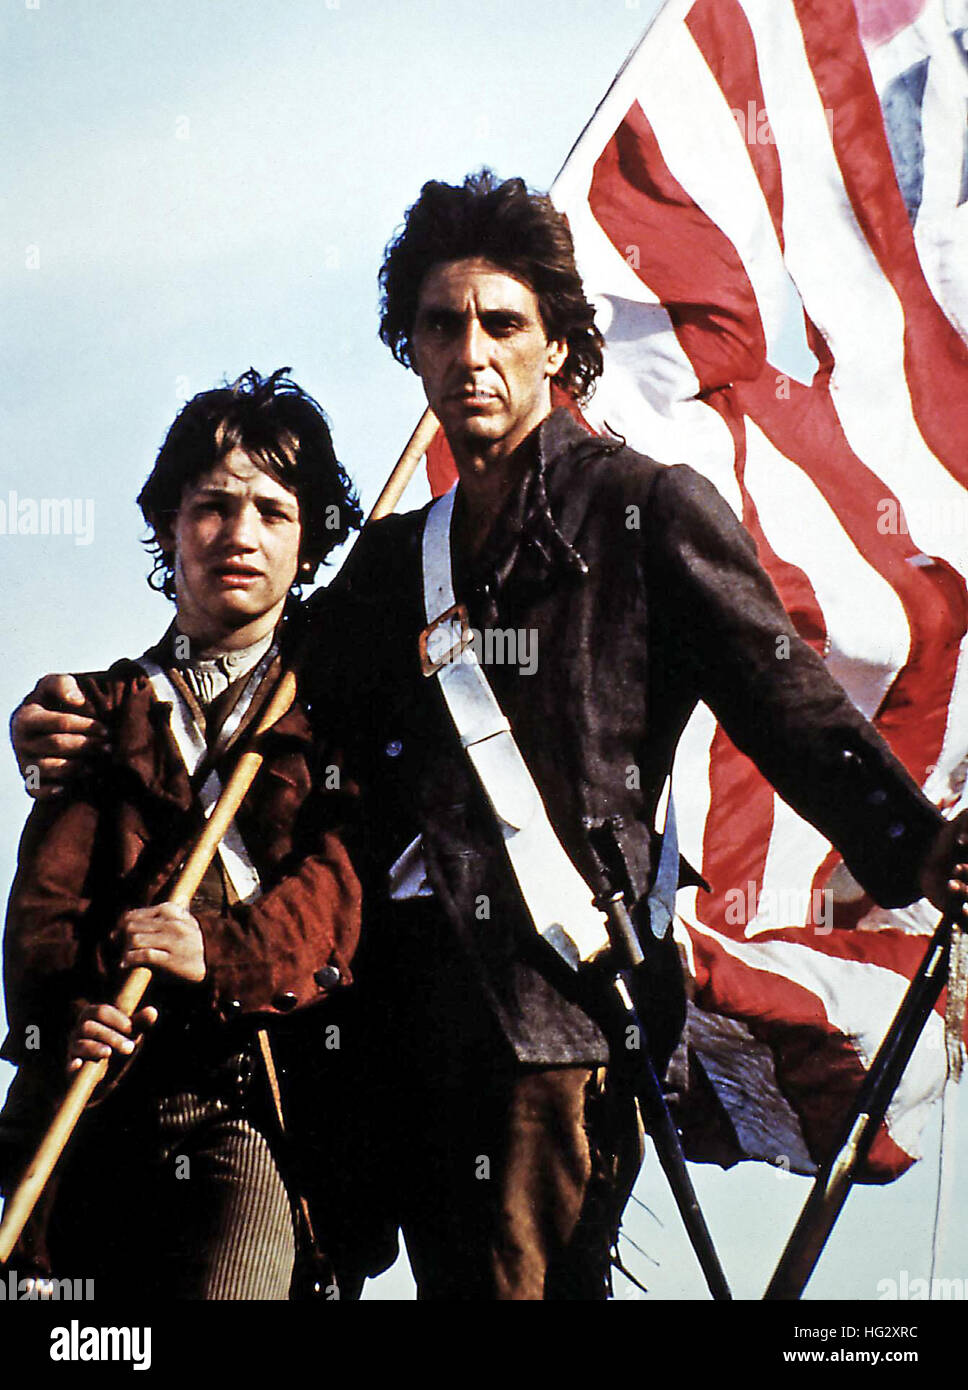 Revolution, UK/Norway 1985 Director: Hugh Hudson Actors/Stars: Al Pacino, Donald Sutherland, Nastassja Kinski Stock Photo